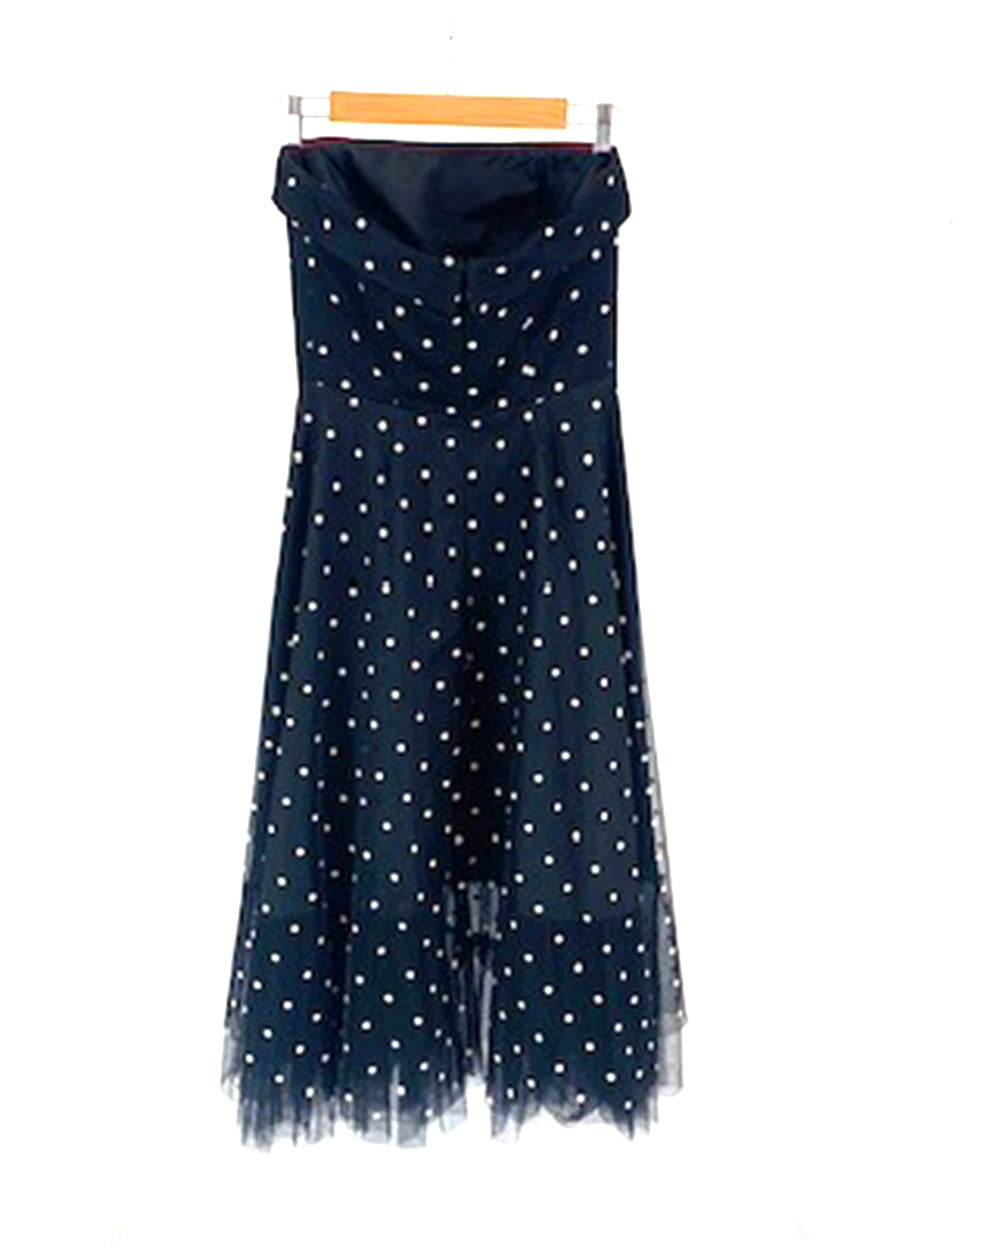 Black Polka Dot Strapless Dress